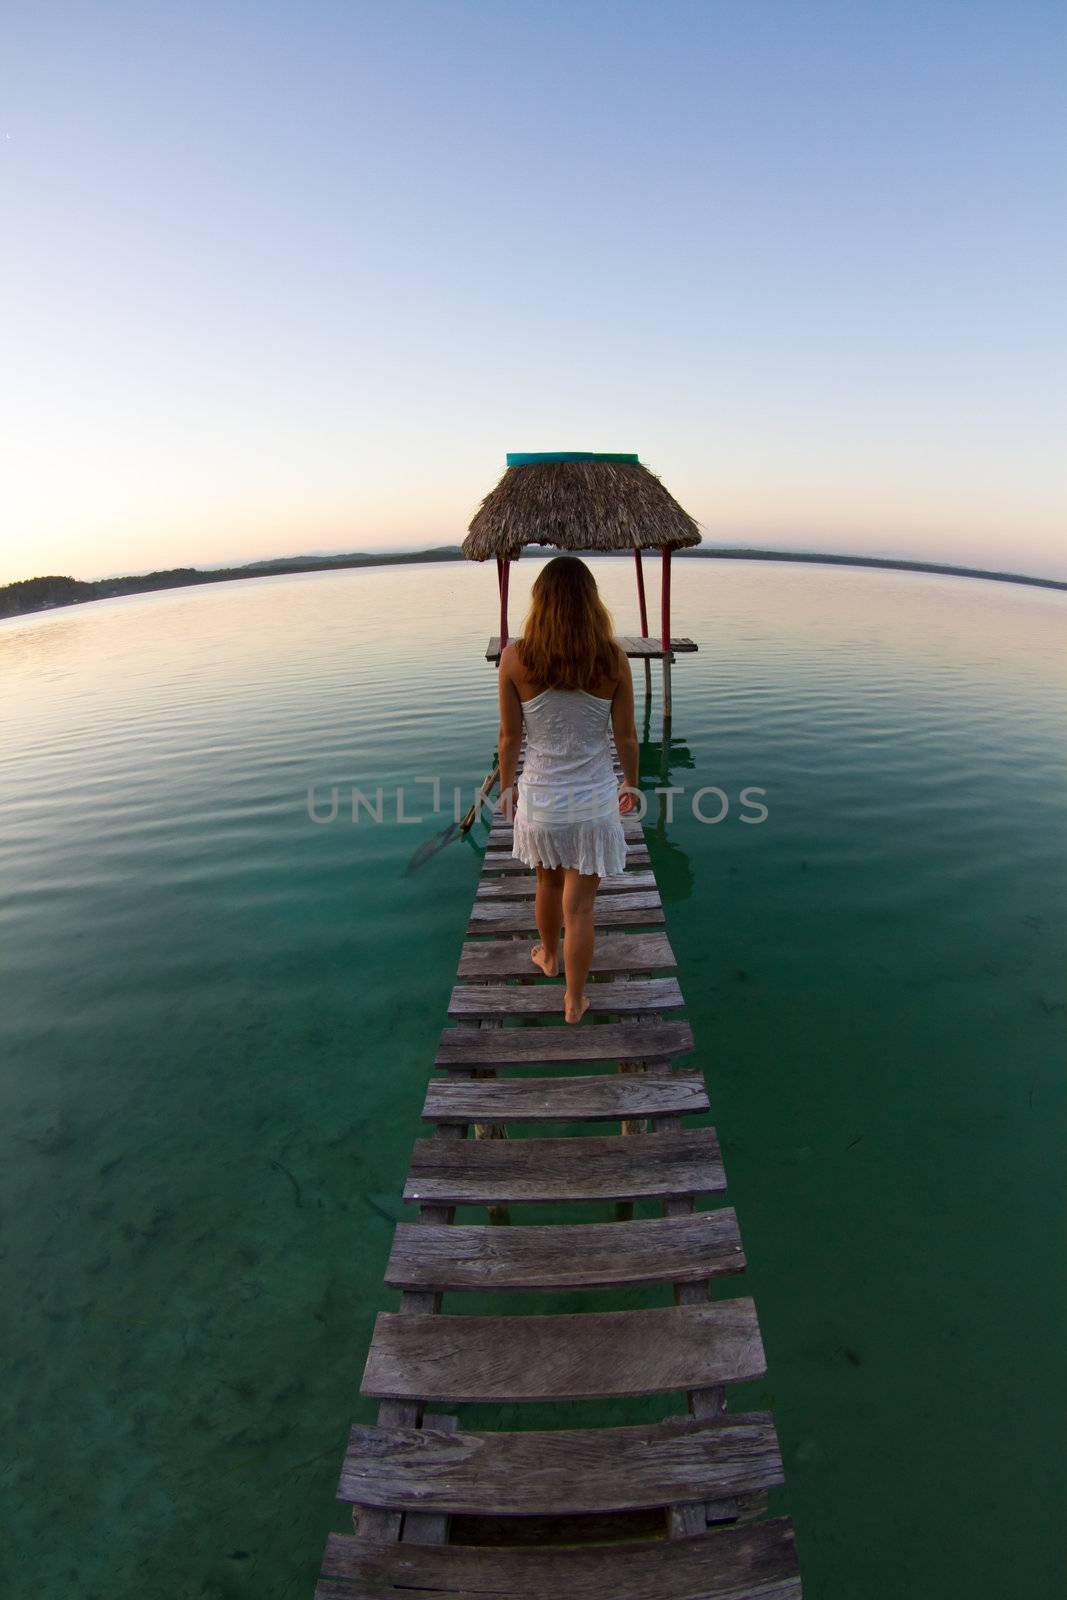 A girl refelecting on a tranquil lake by MojoJojoFoto